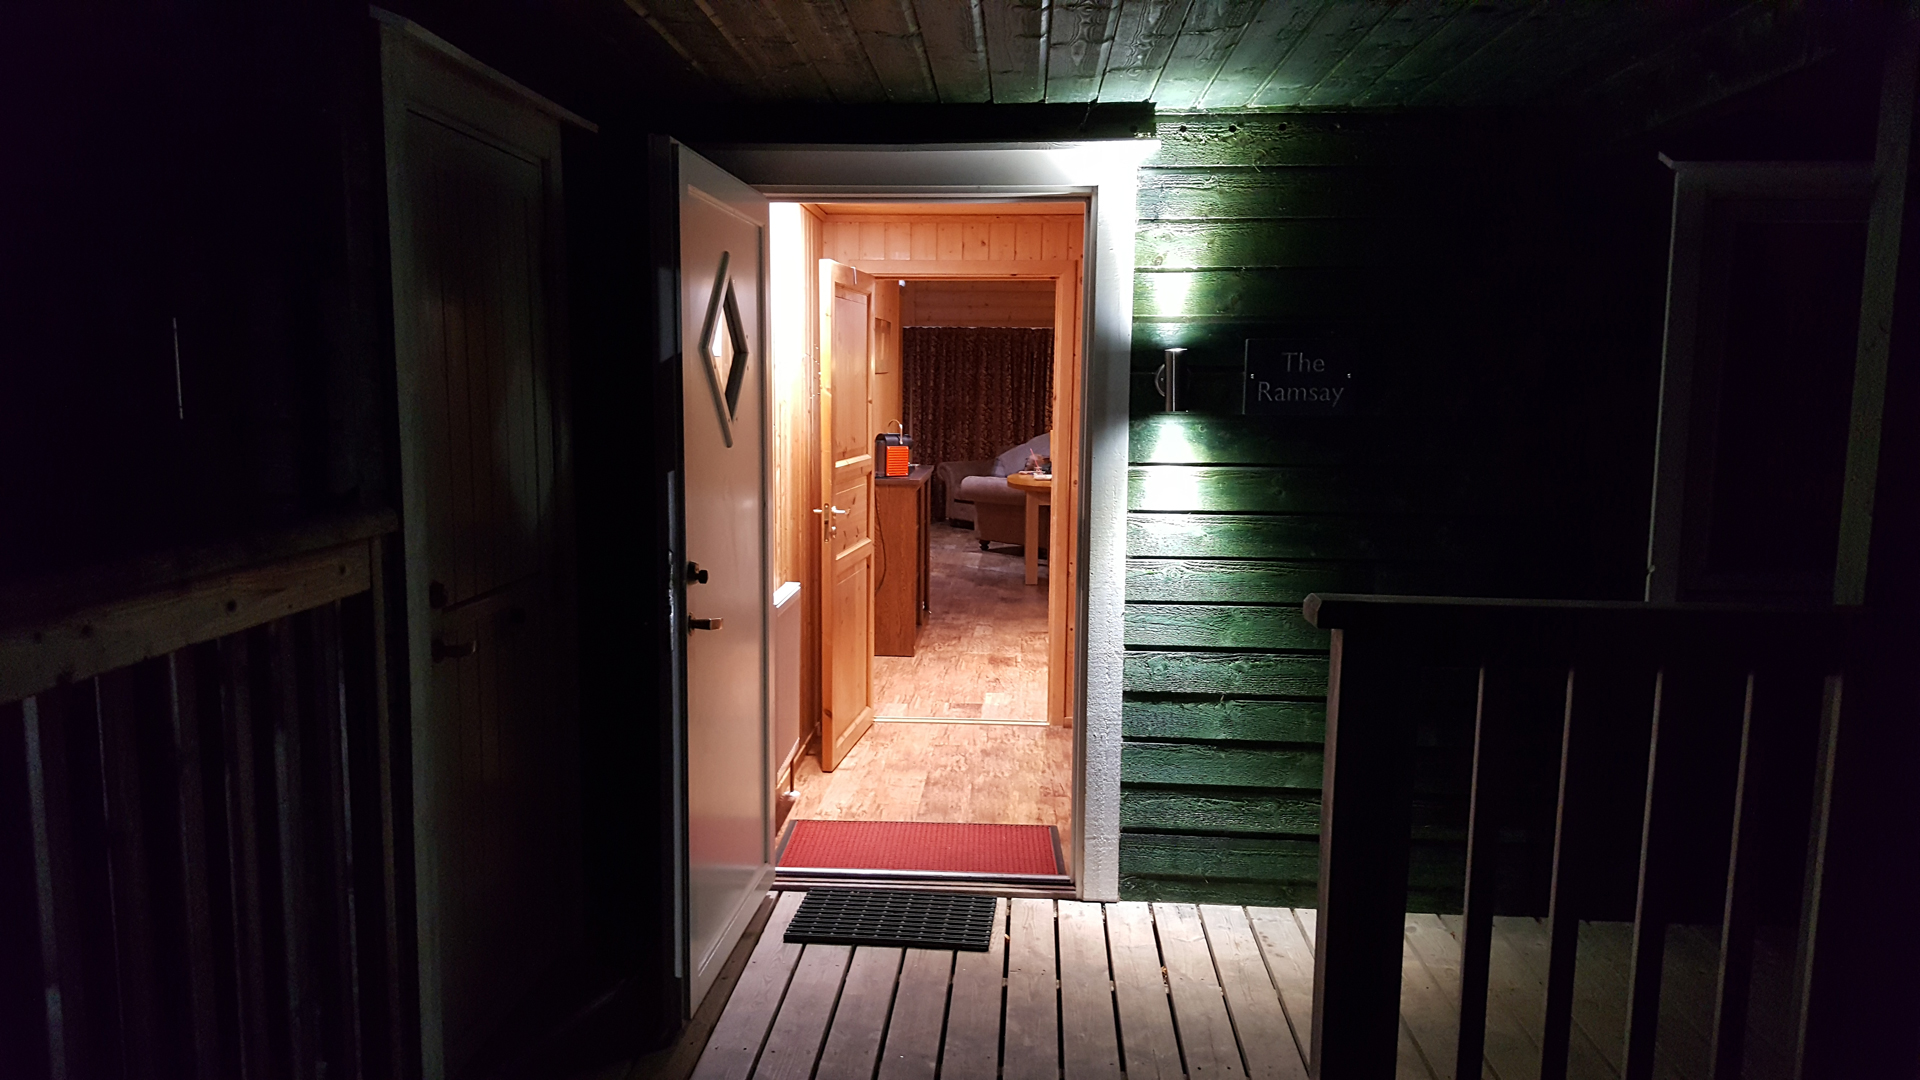 Main door threshold into The Ramsay lodge at Airhouses.